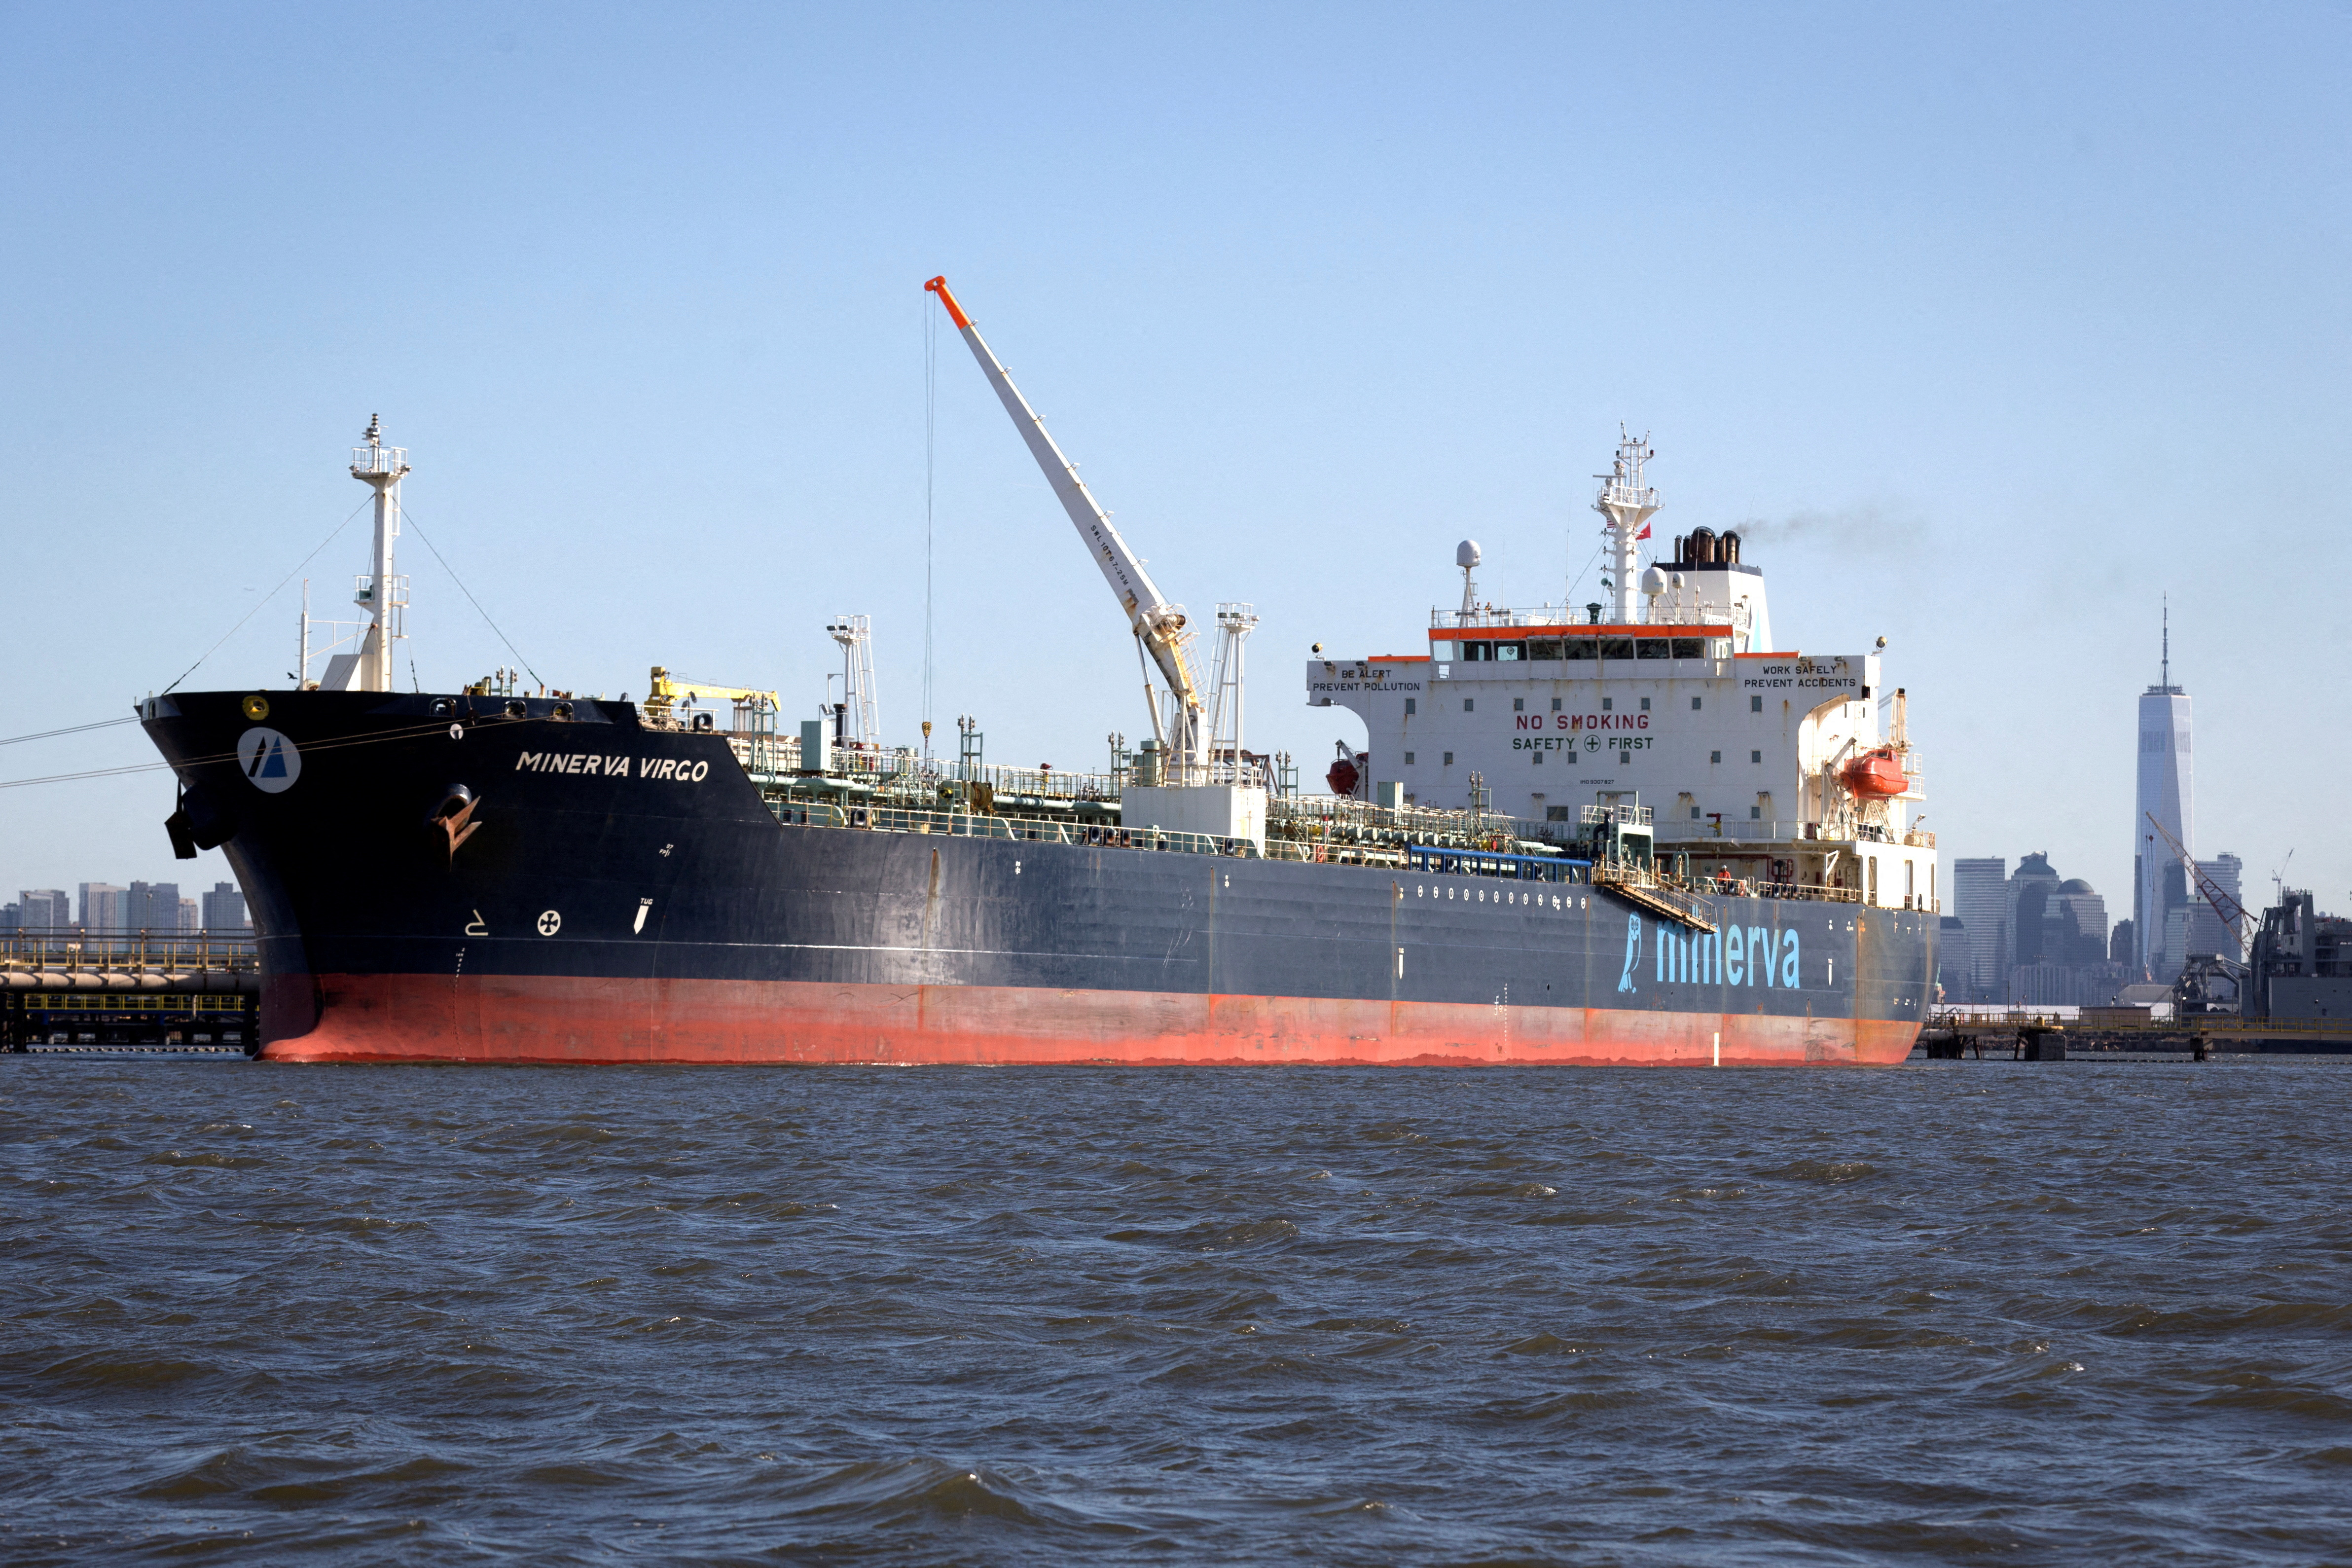 Oil tanker Minerva Virgo docked at the Bayonne New Jersey oil terminal